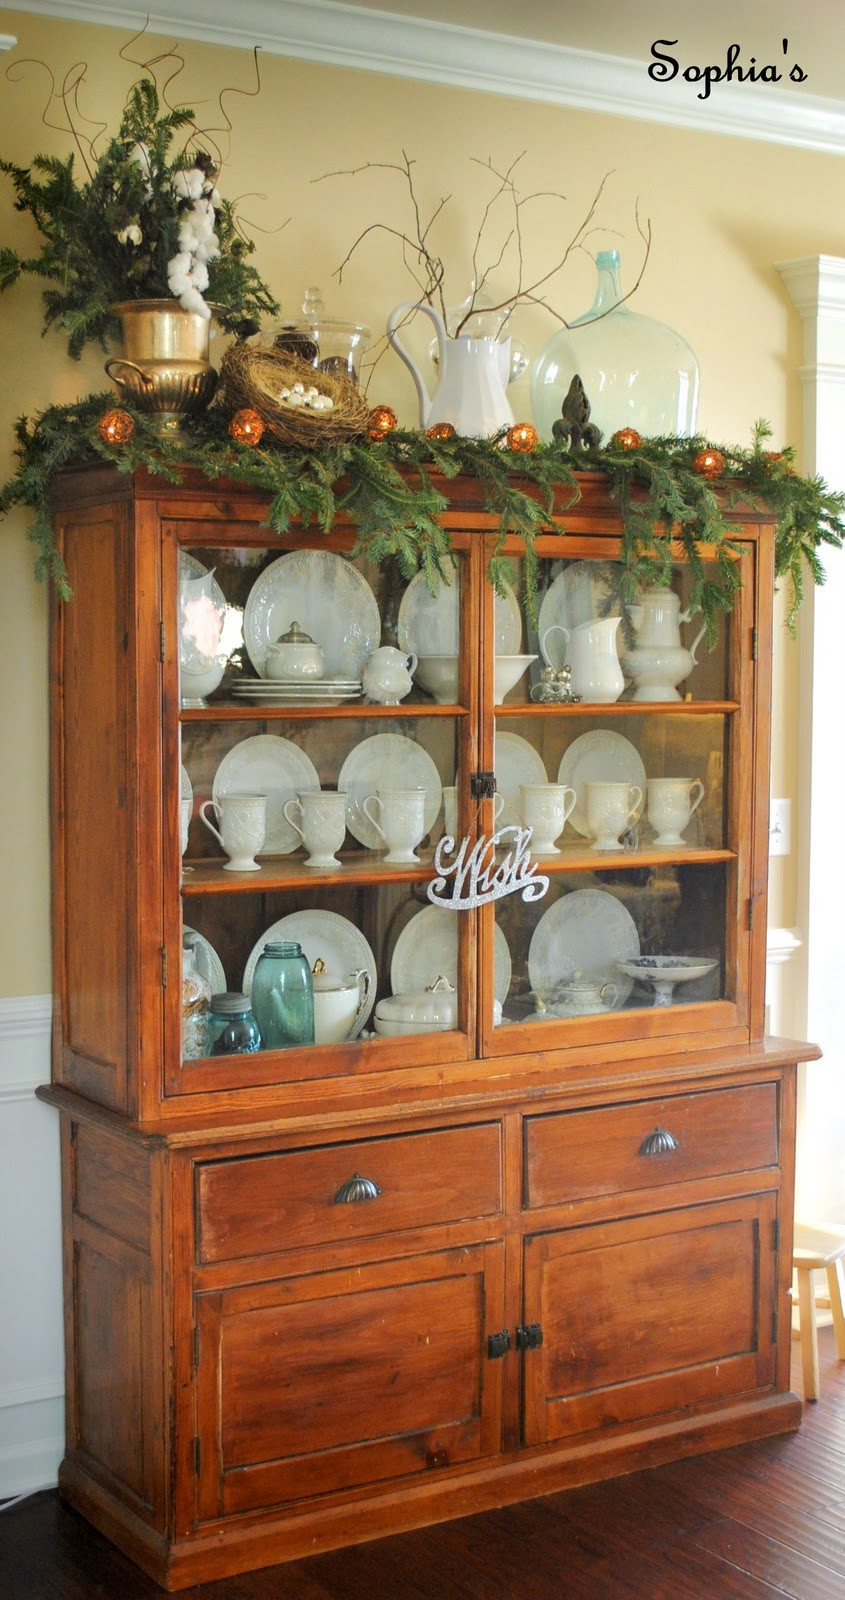 Christmas Cabinet Decorations
 Sophia s Christmas Cabinet Vignette